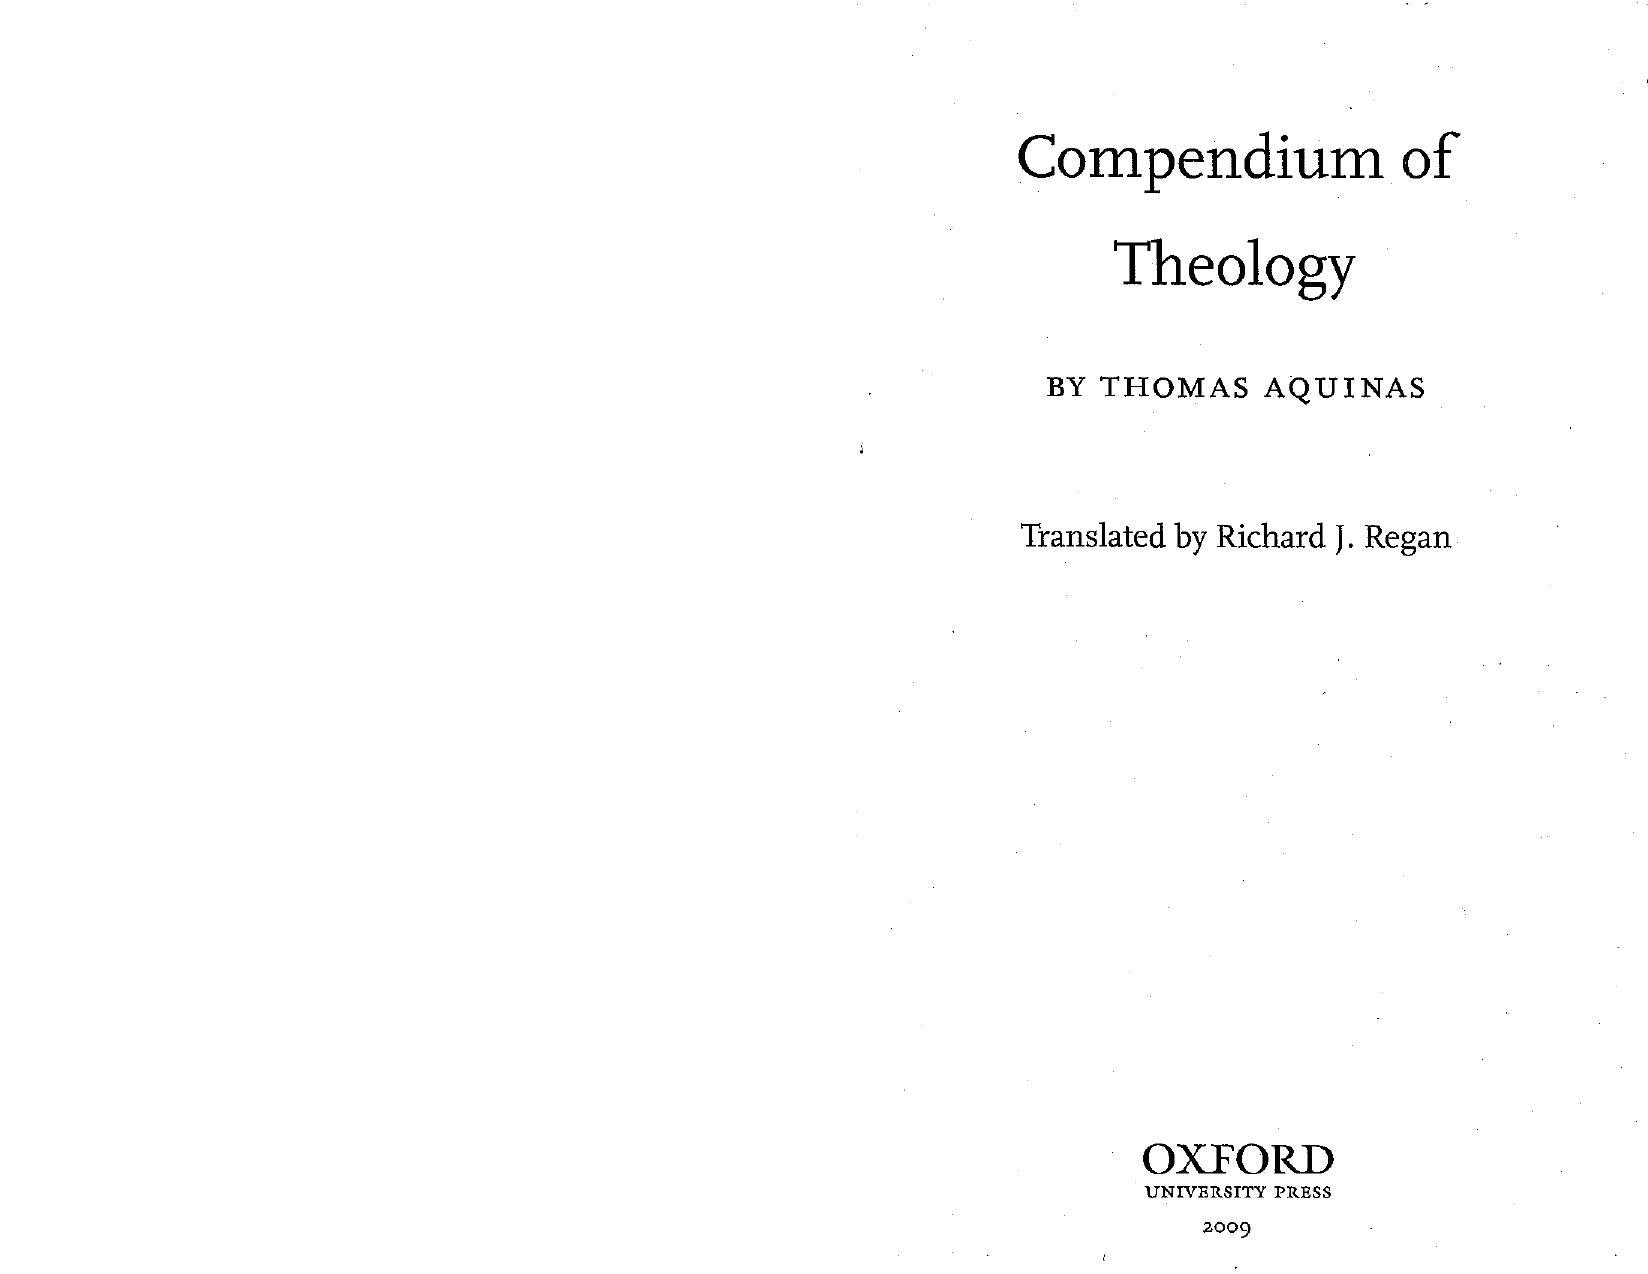 Compendium of Theology by Thomas Aquinas